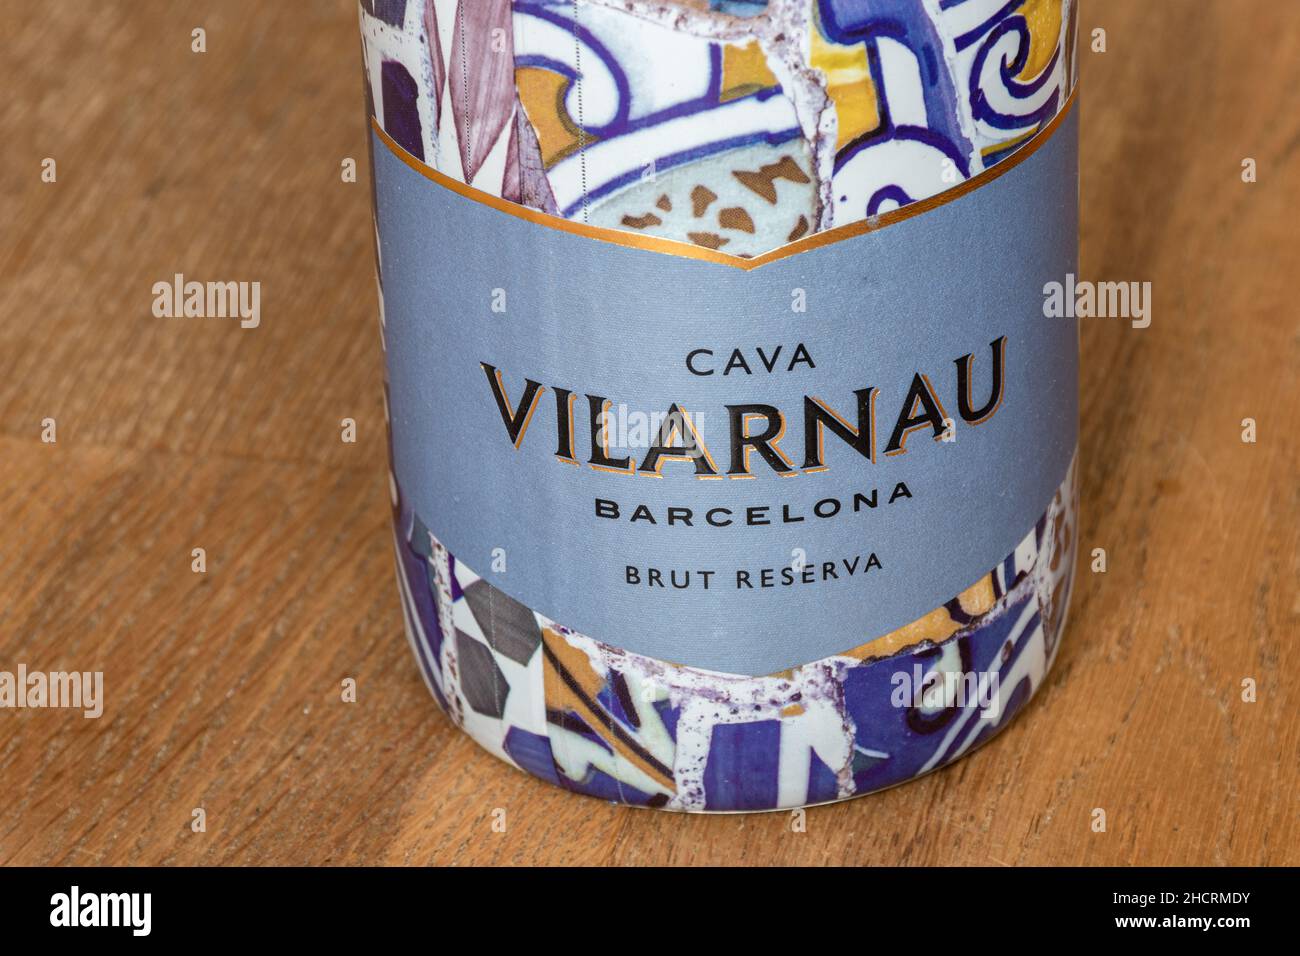 Bottle of Vilarnau Brut Reserva Cava, a sparkling Spanish wine from Barcelona Stock Photo